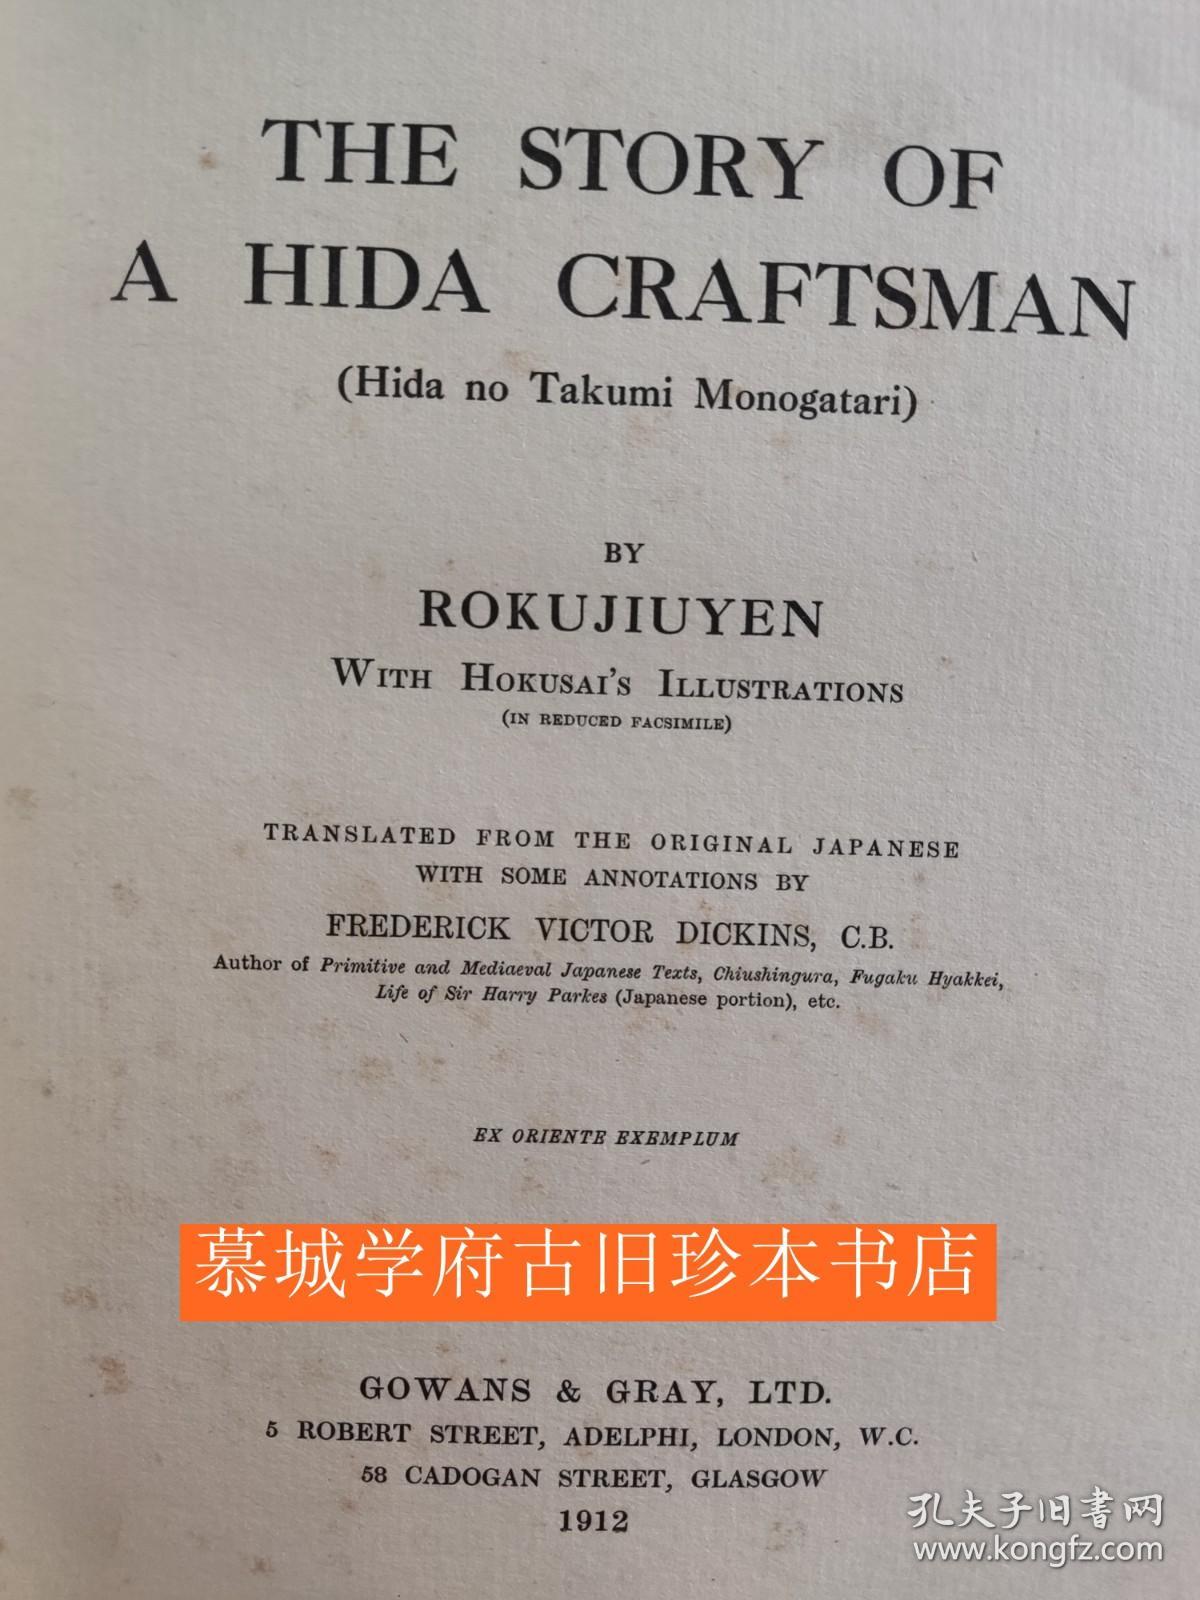 【毛边限量版】The Story of a Hida Craftsman (Hida no Takumi Monogatari) by Rokujiuyen with Hokusai's Illustrations 英译石川雅望《飛騨匠物語》，又名《飛弾匠物語》，葛飾北斎插图